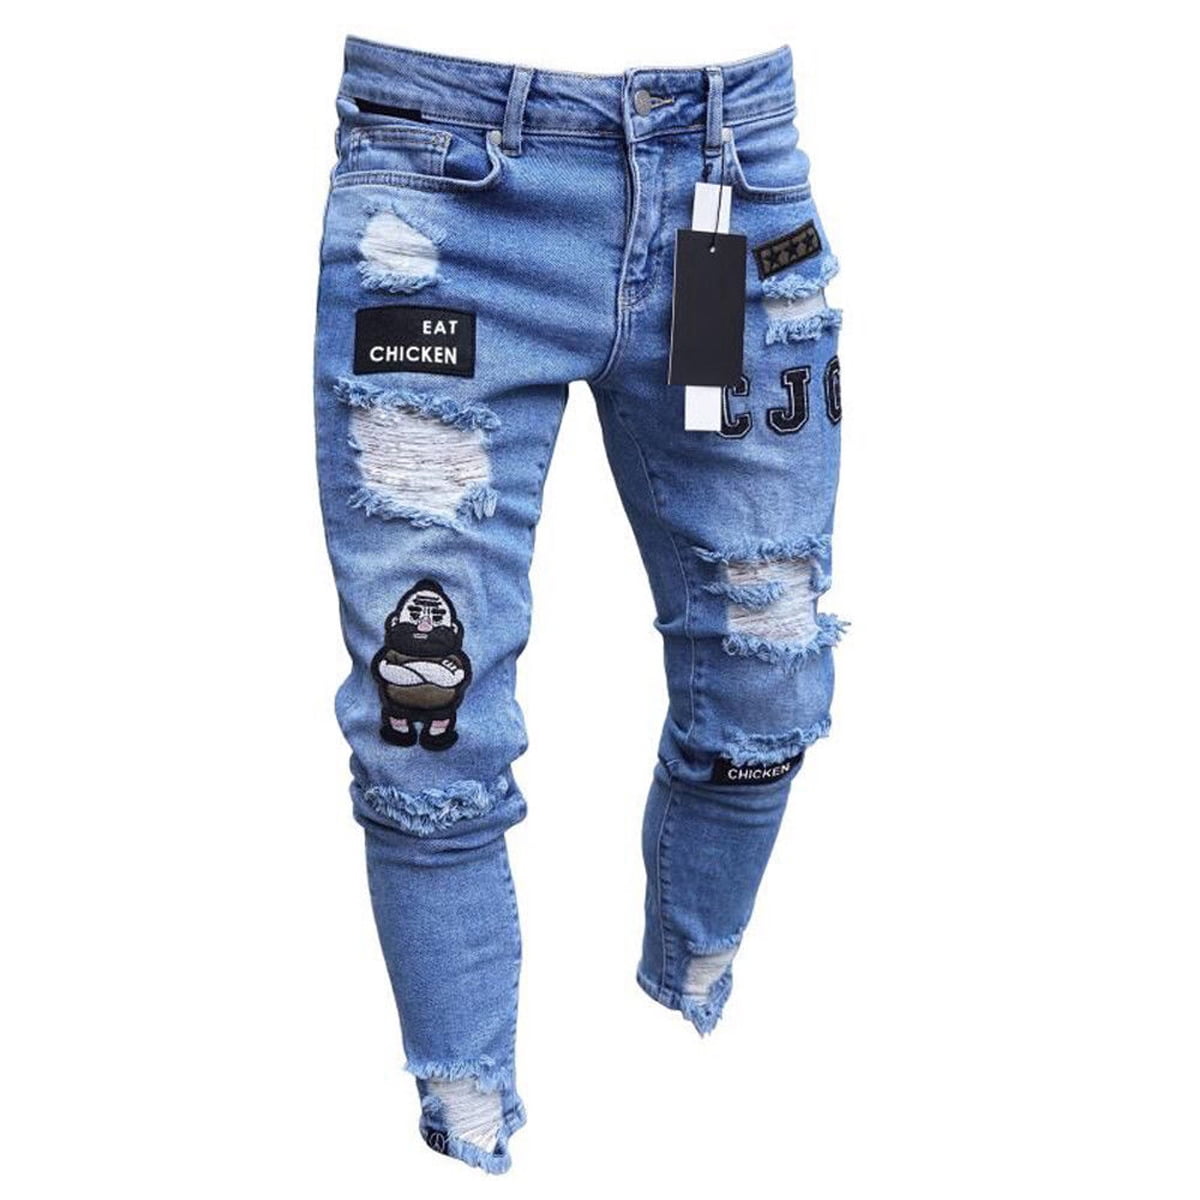 Men's Blue Slim Fit Stretch Jeans